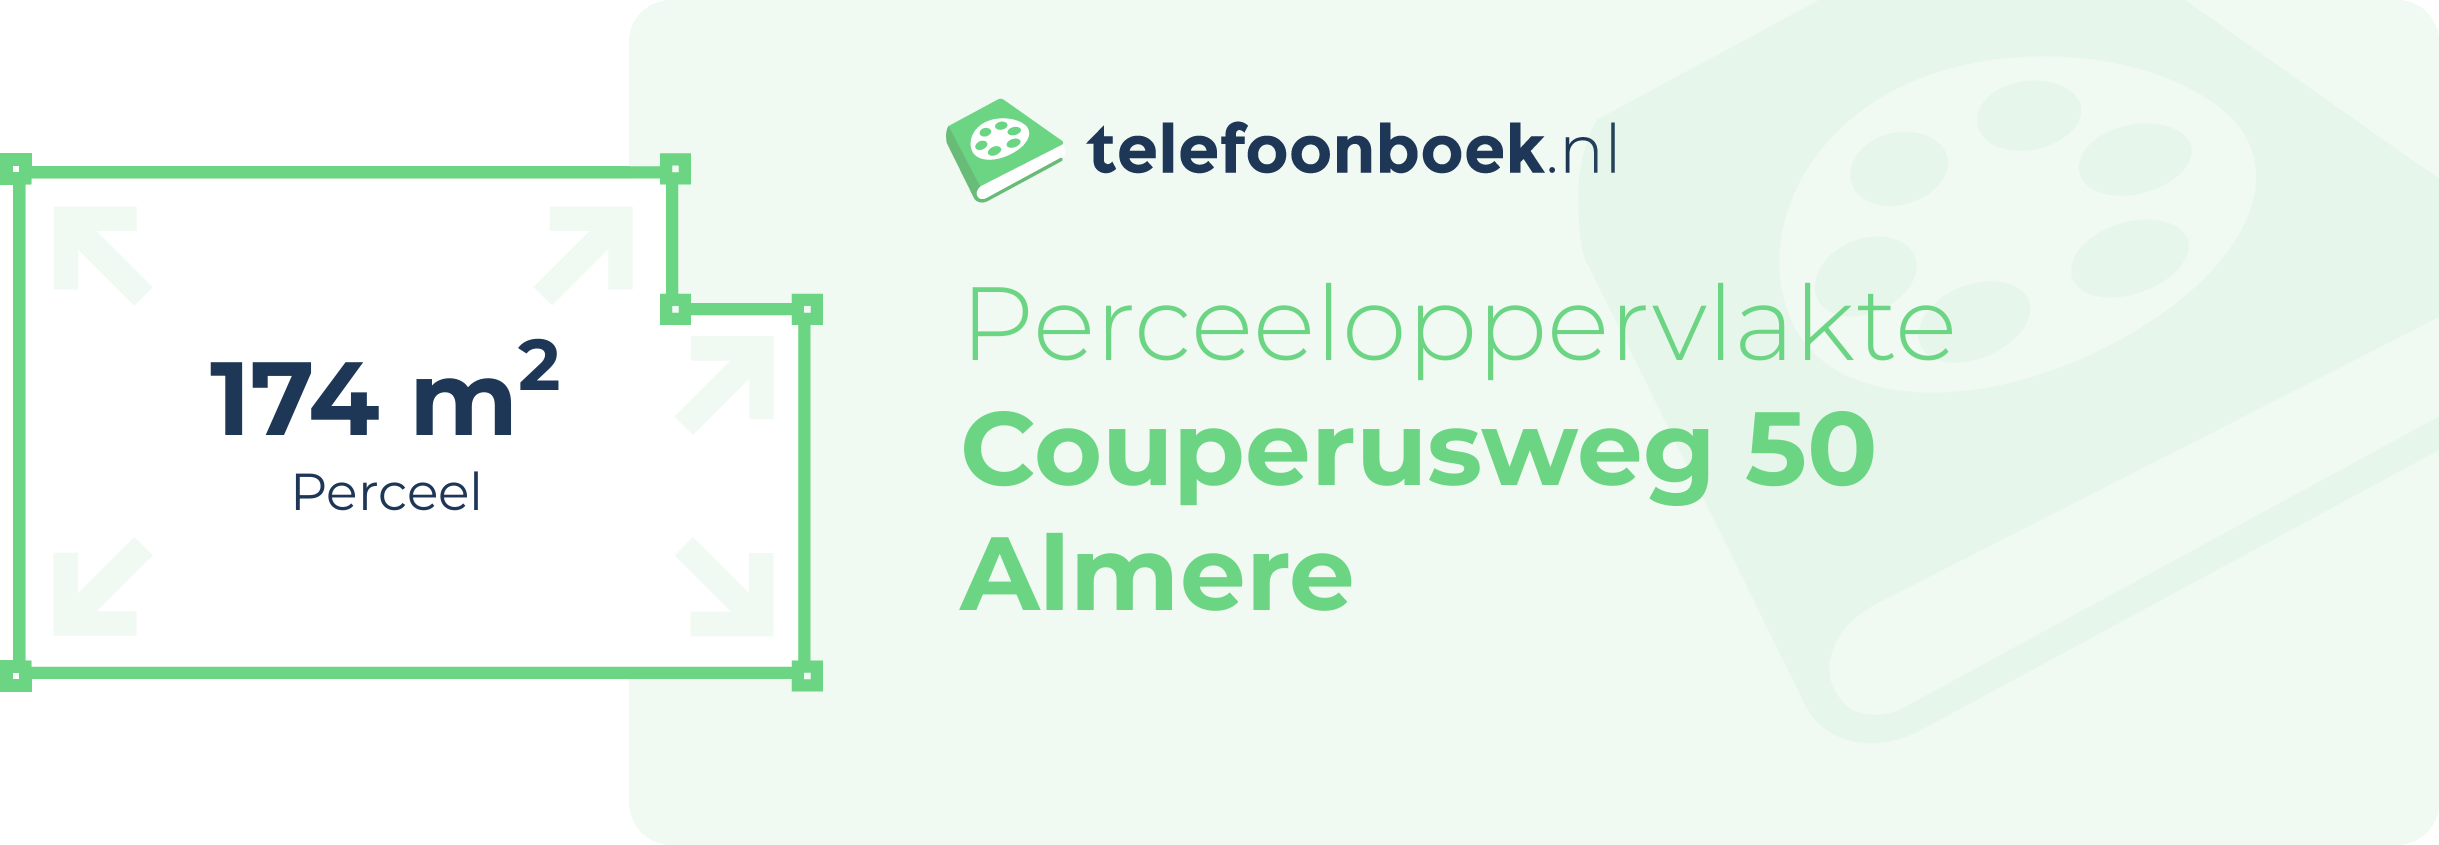 Perceeloppervlakte Couperusweg 50 Almere